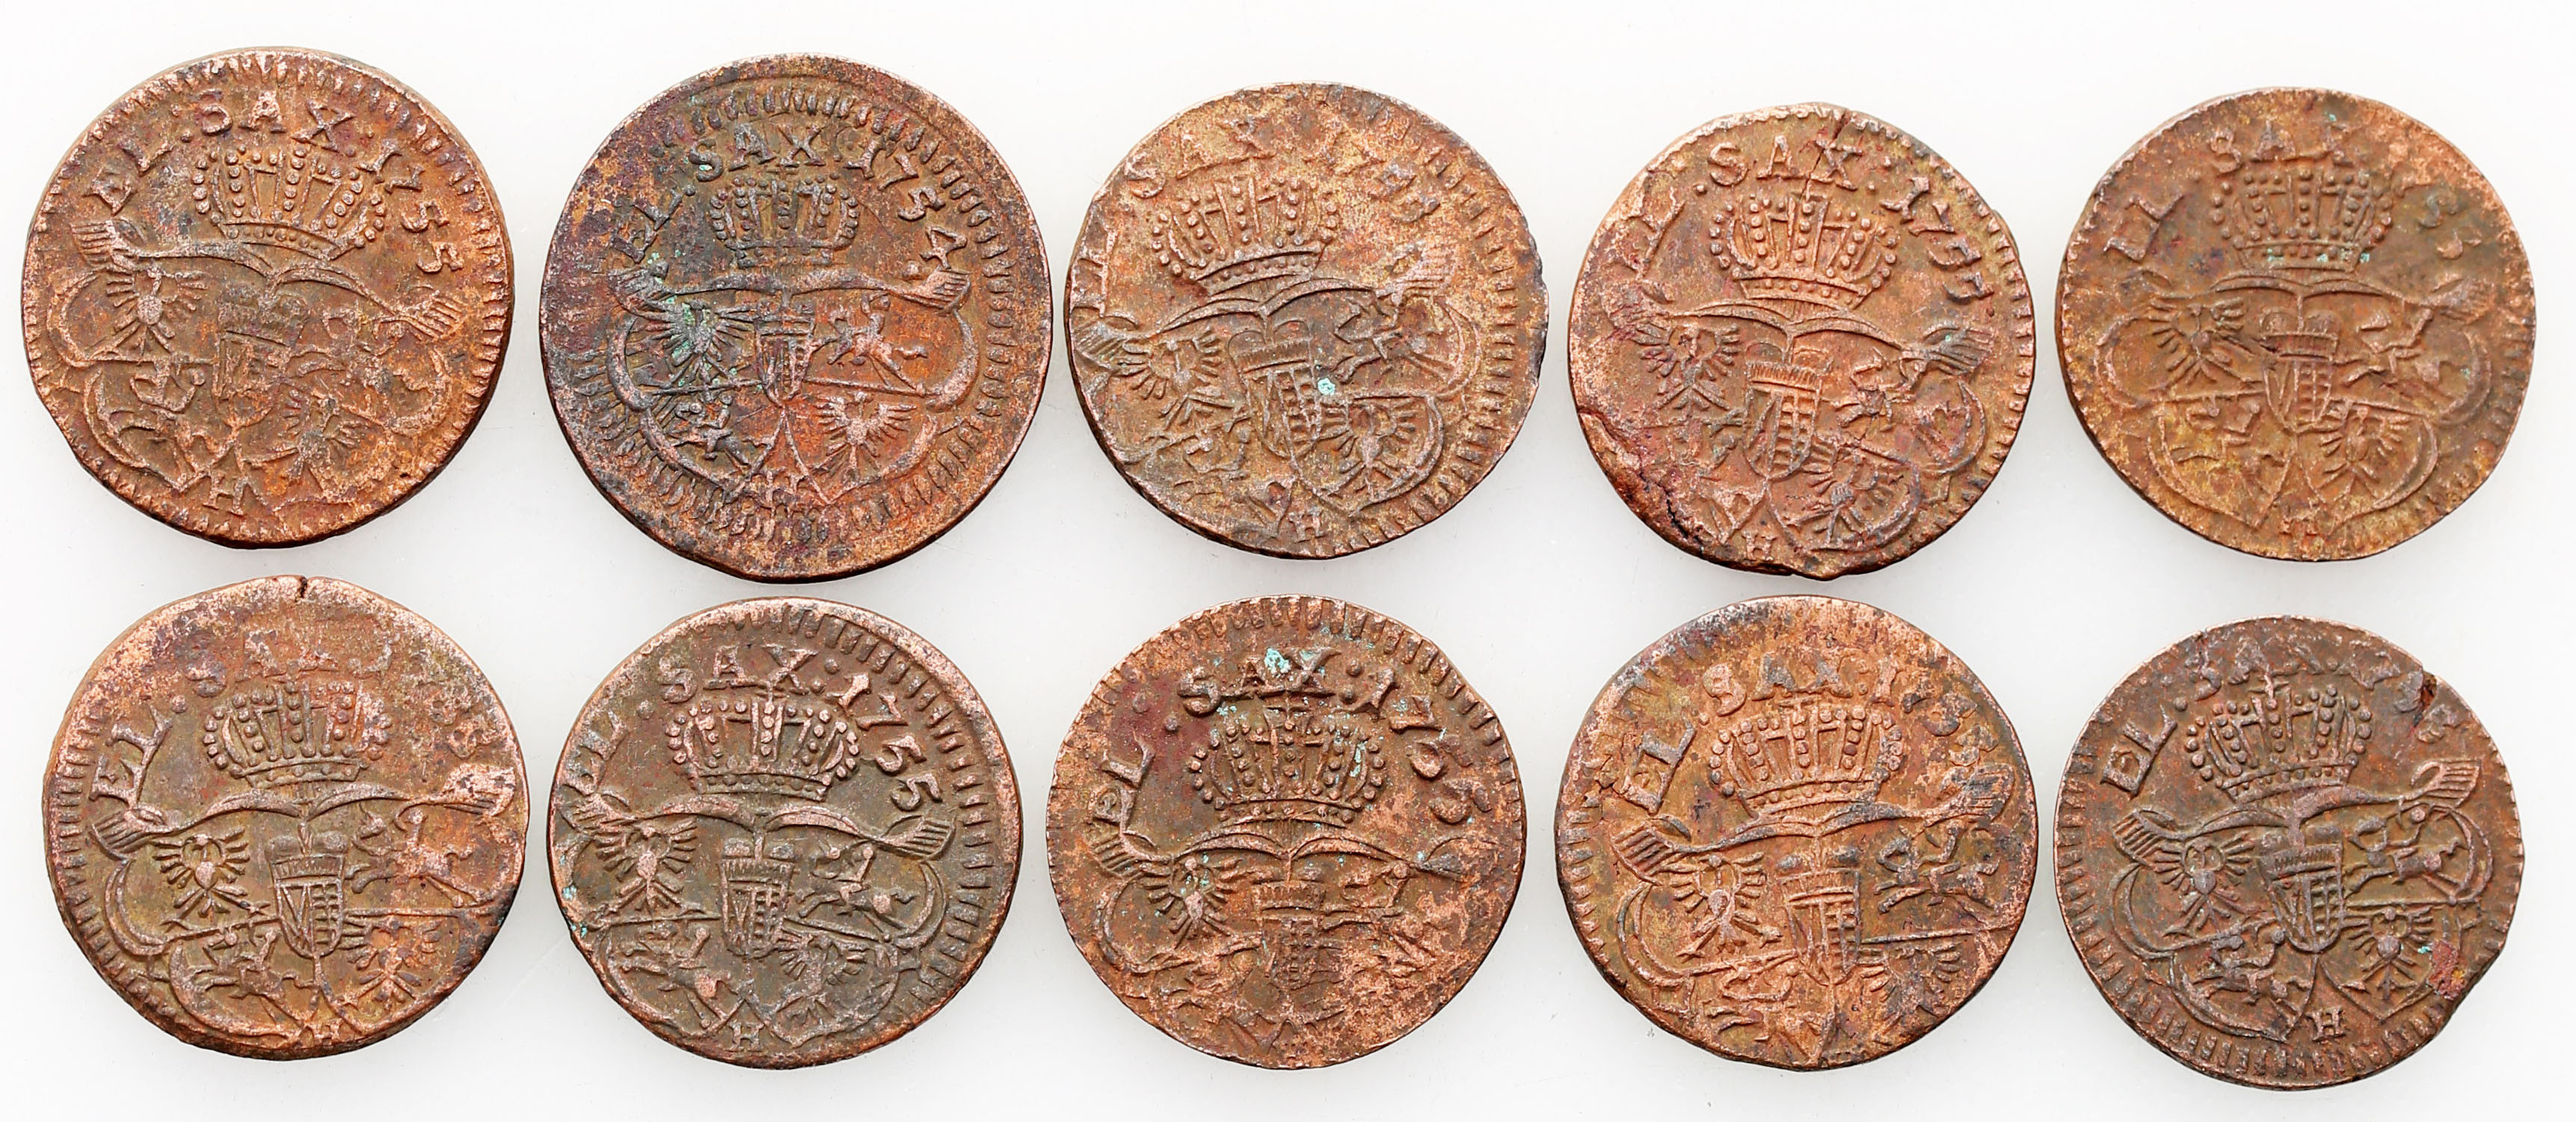 August III Sas. Grosz 1754-1755, zestaw 10 monet